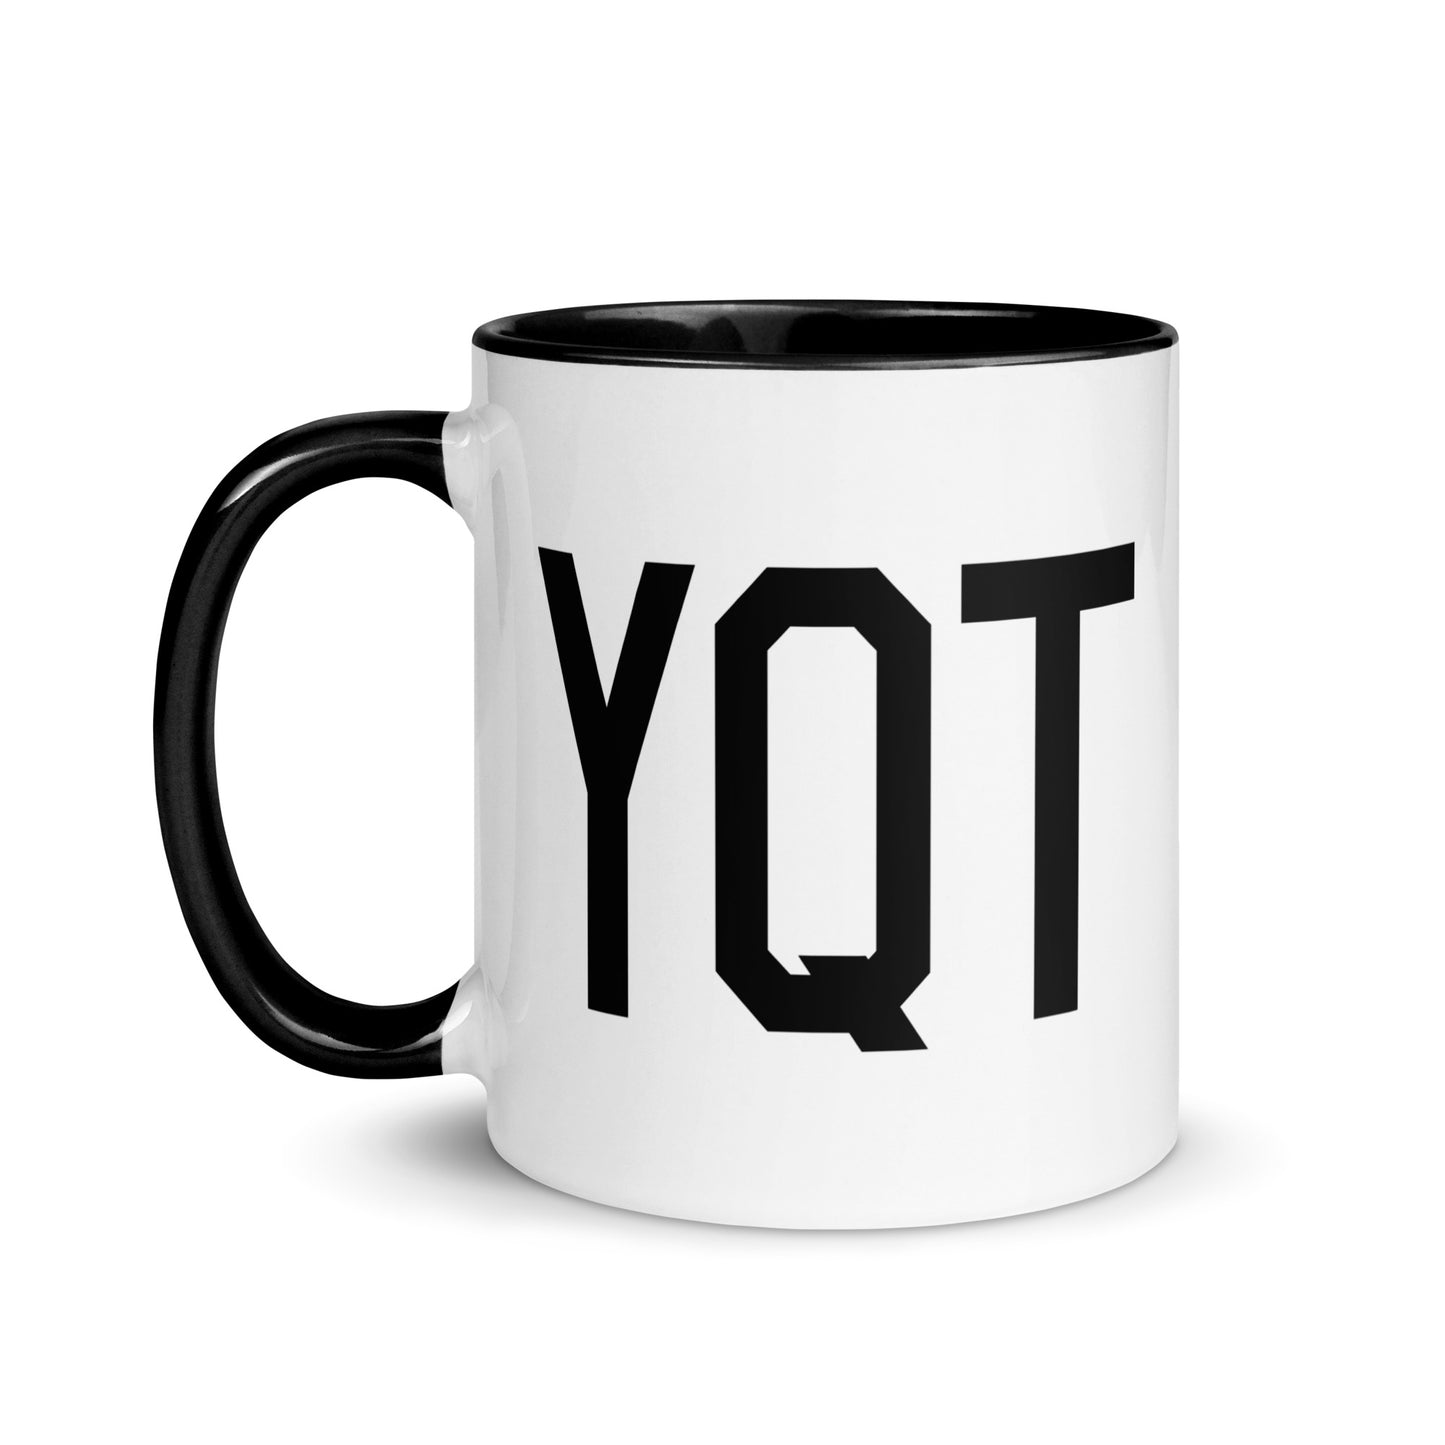 Aviation-Theme Coffee Mug - Black • YQT Thunder Bay • YHM Designs - Image 03